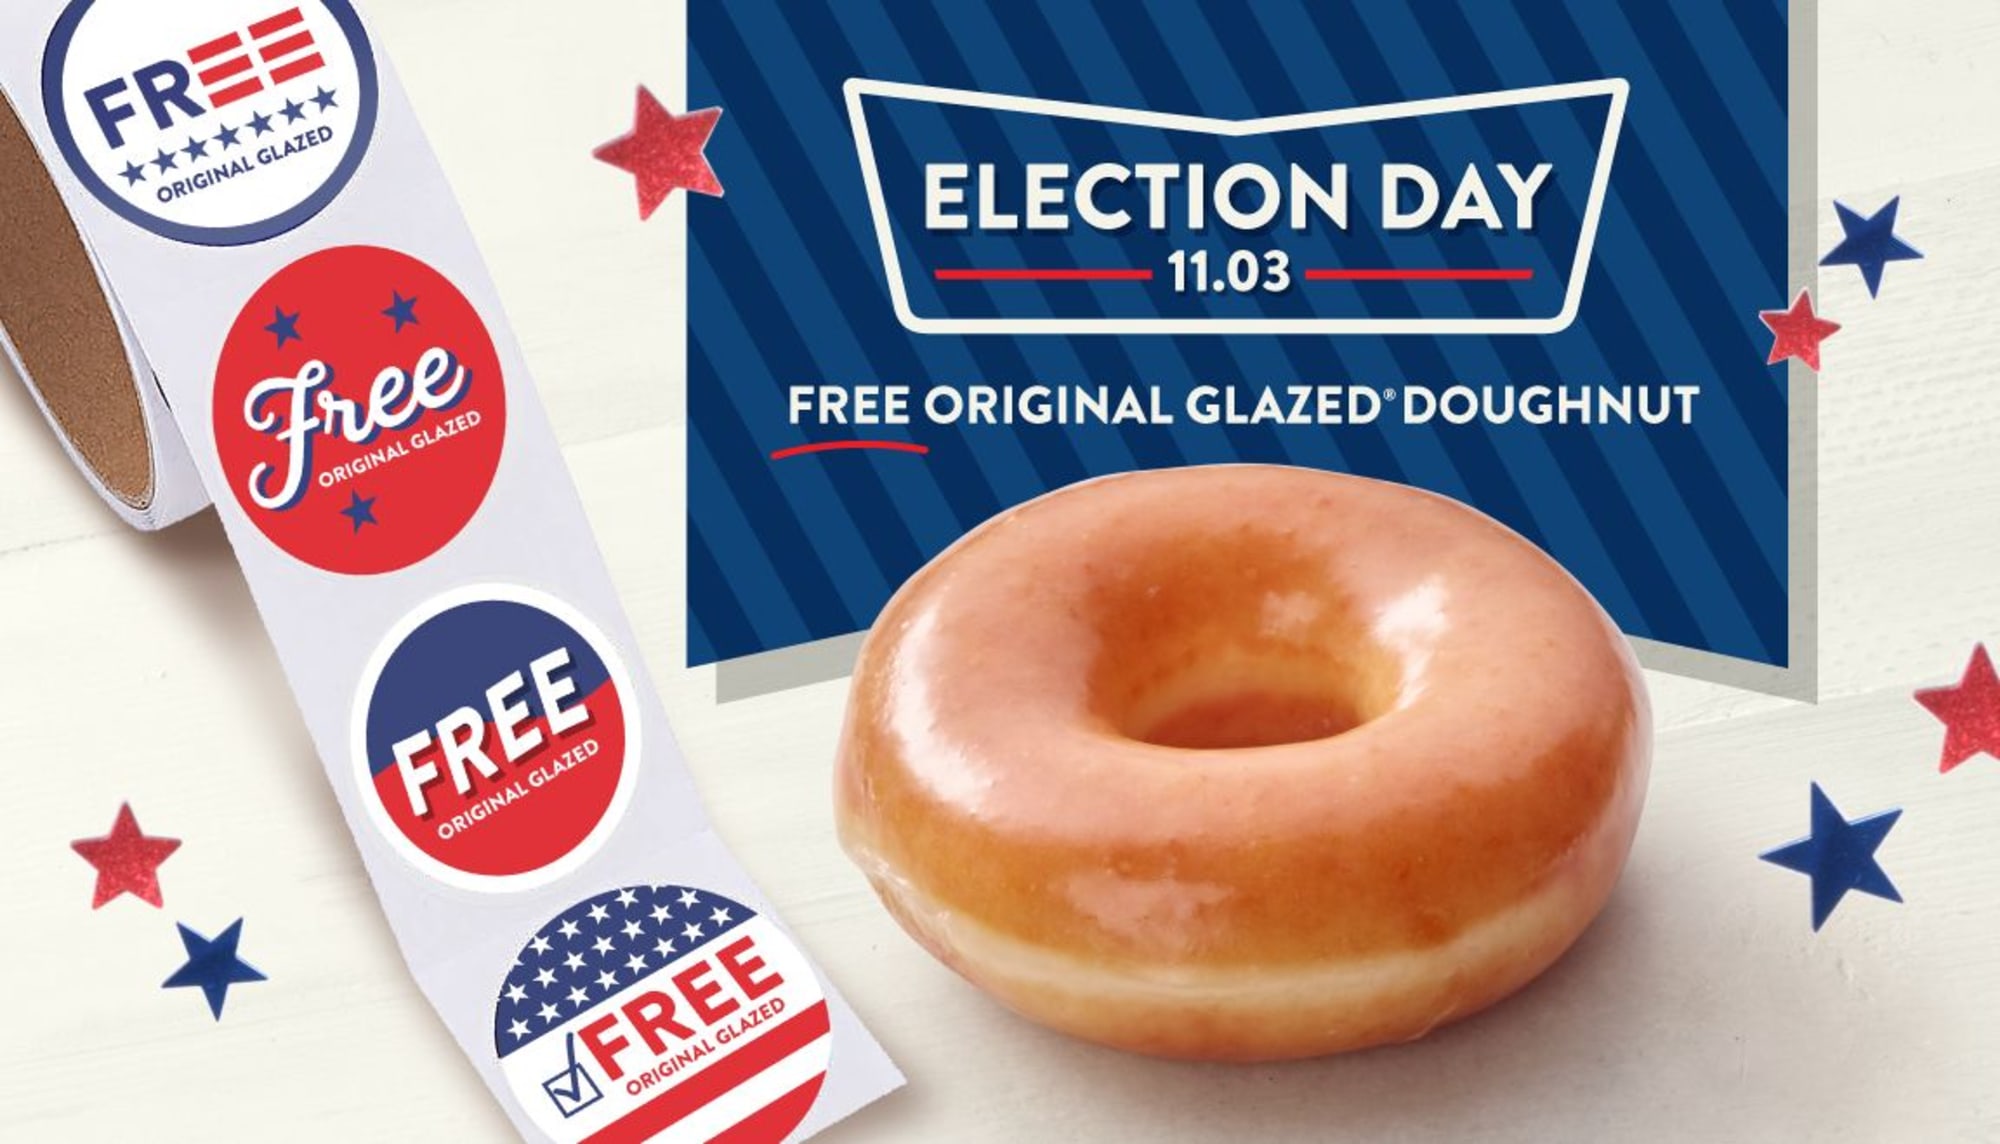 Krispy Kreme is adding a bit of sweetness to Election Day